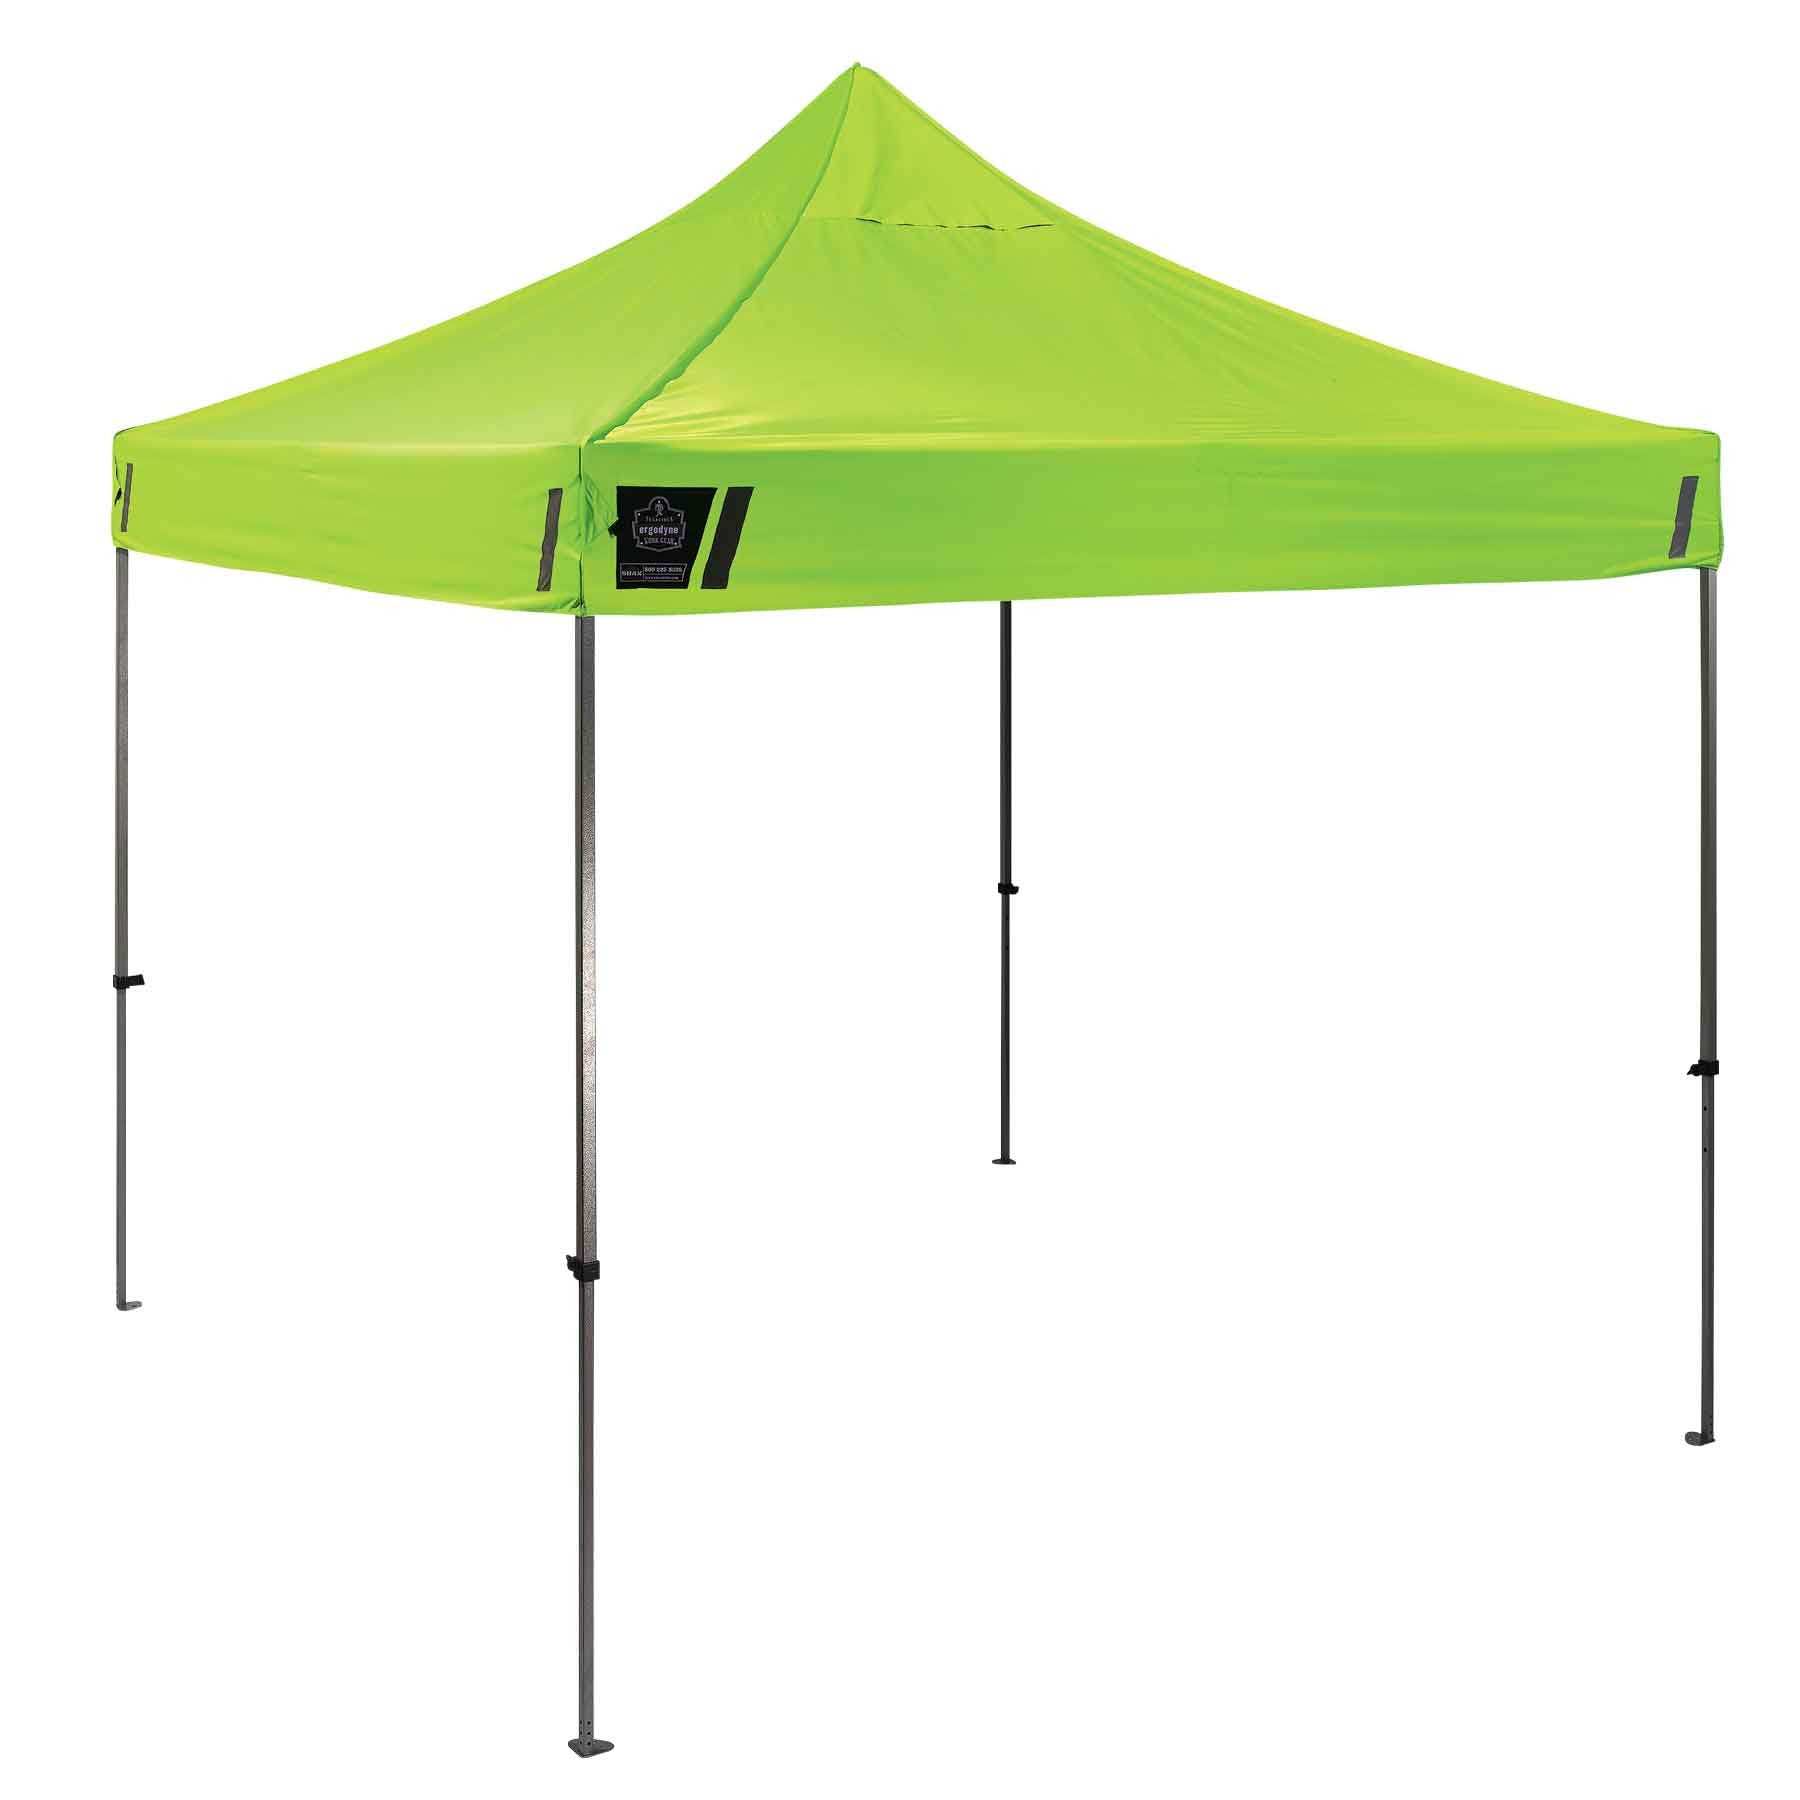 Ergodyne SHAX 6000 Heavy-Duty Commercial Pop-Up Tent-eSafety Supplies, Inc